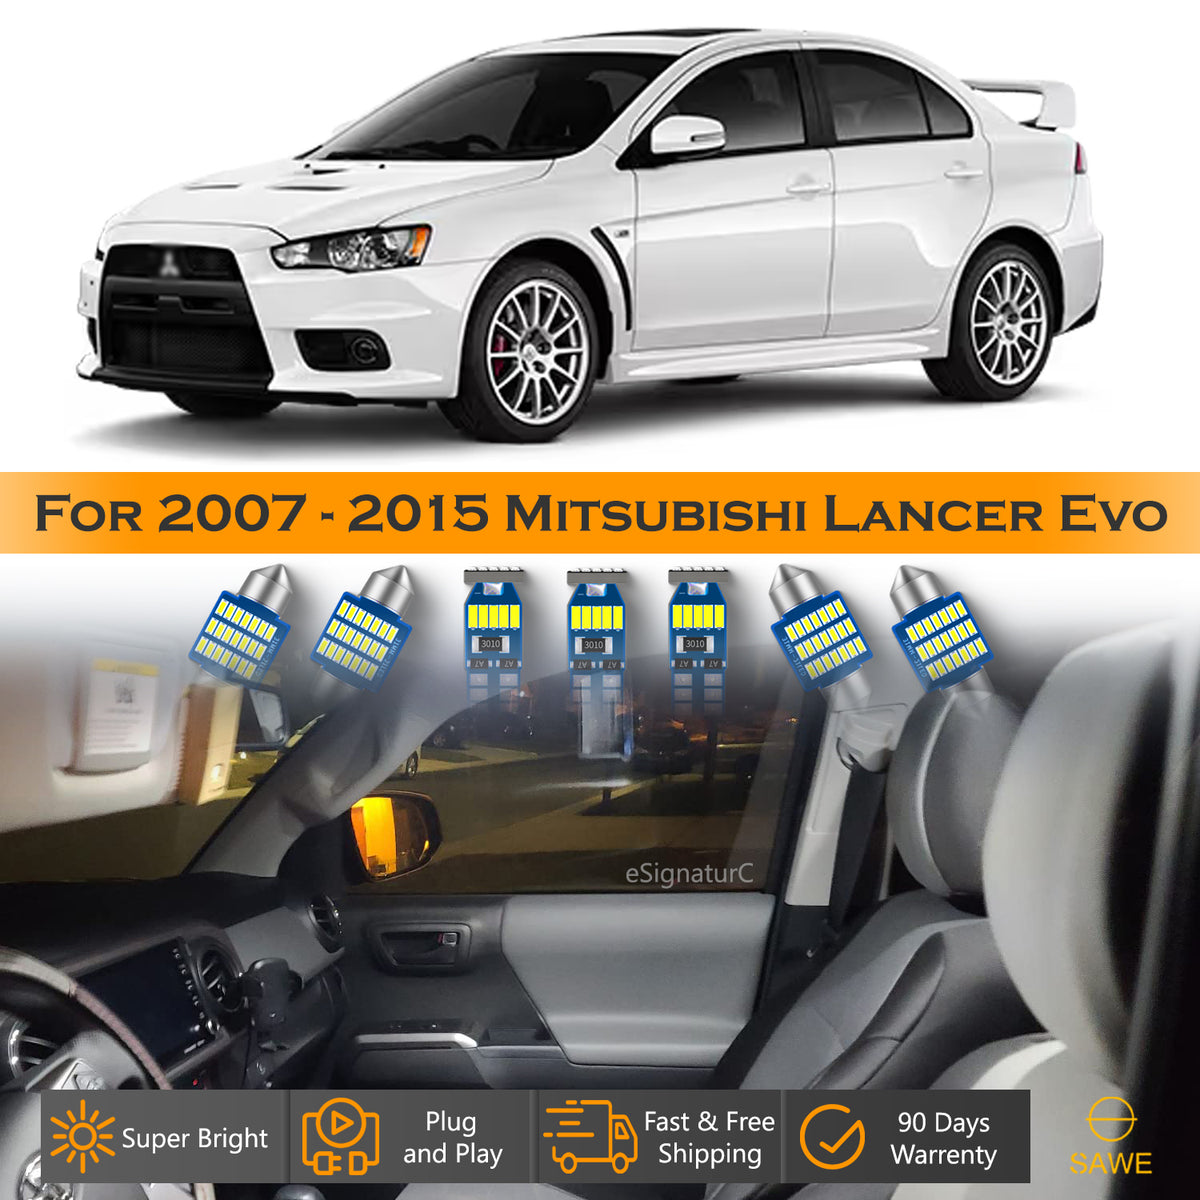 For Mitsubishi Lancer Evolution Interior LED Lights - Dome & Map Light Bulb Package Kit for 2007 - 2015 - White